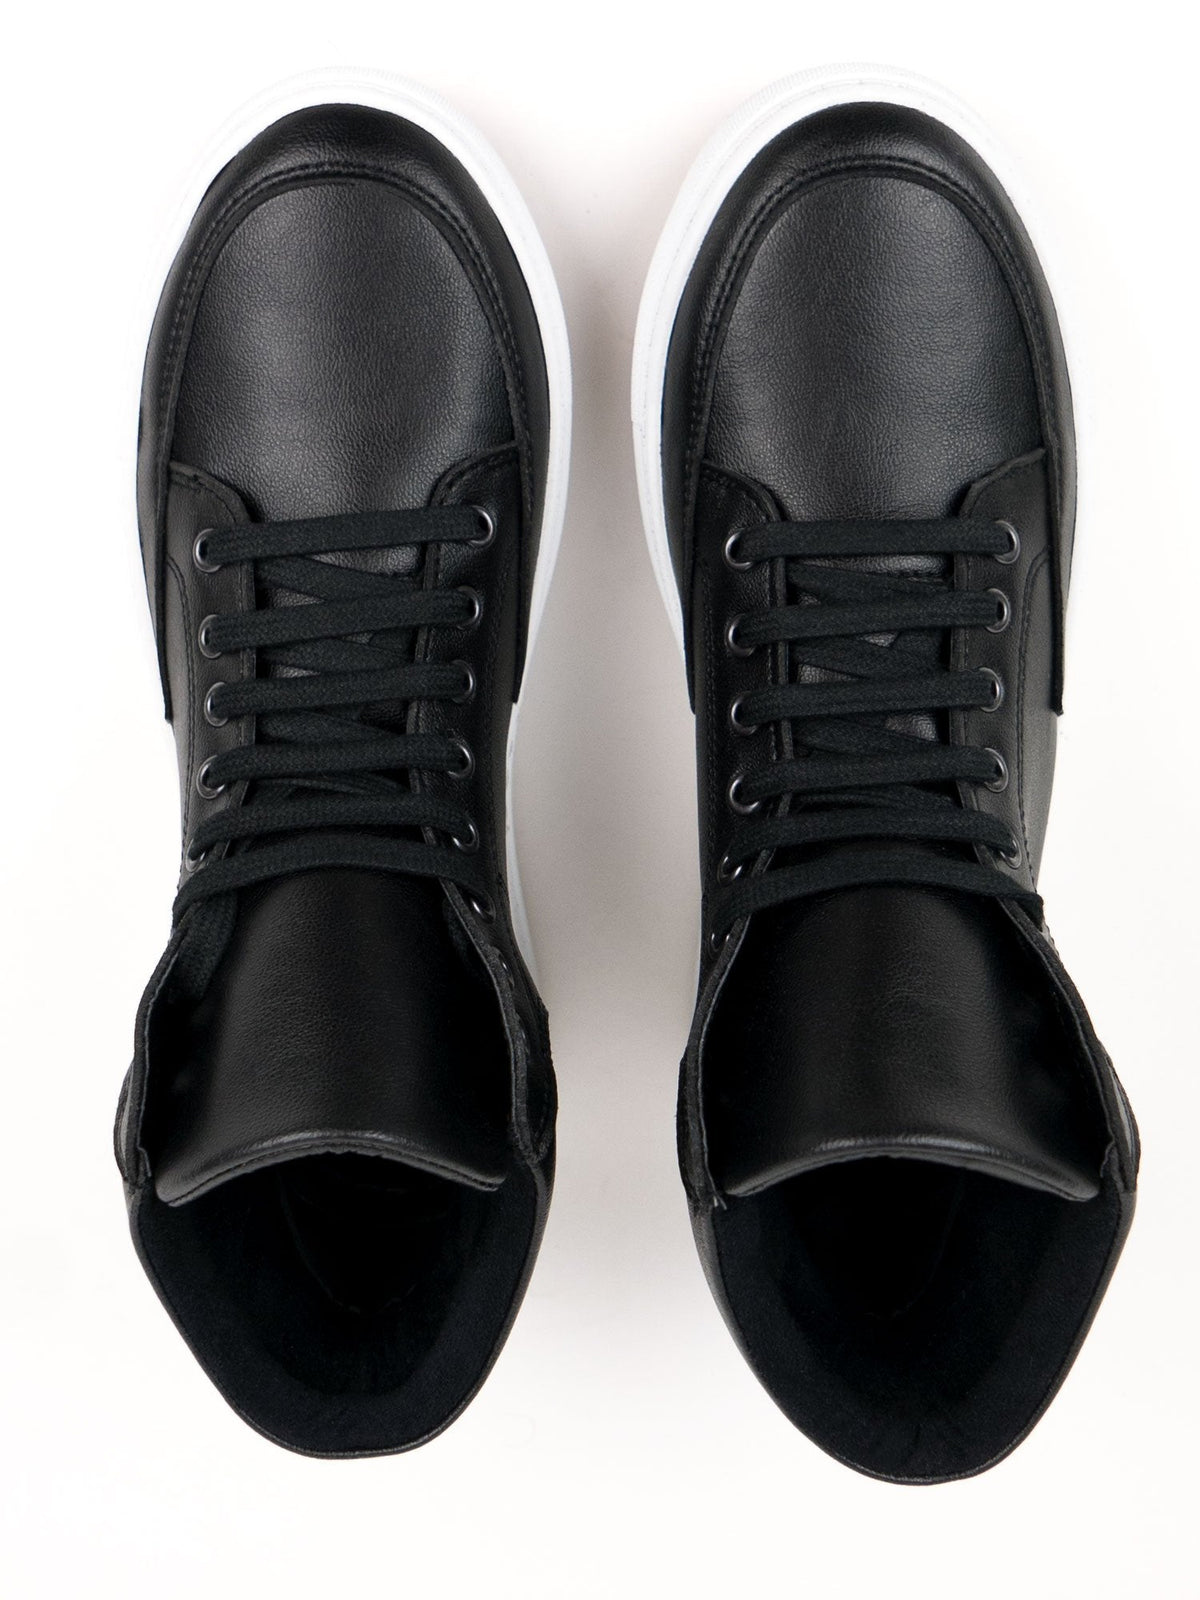 Sneaker Boots